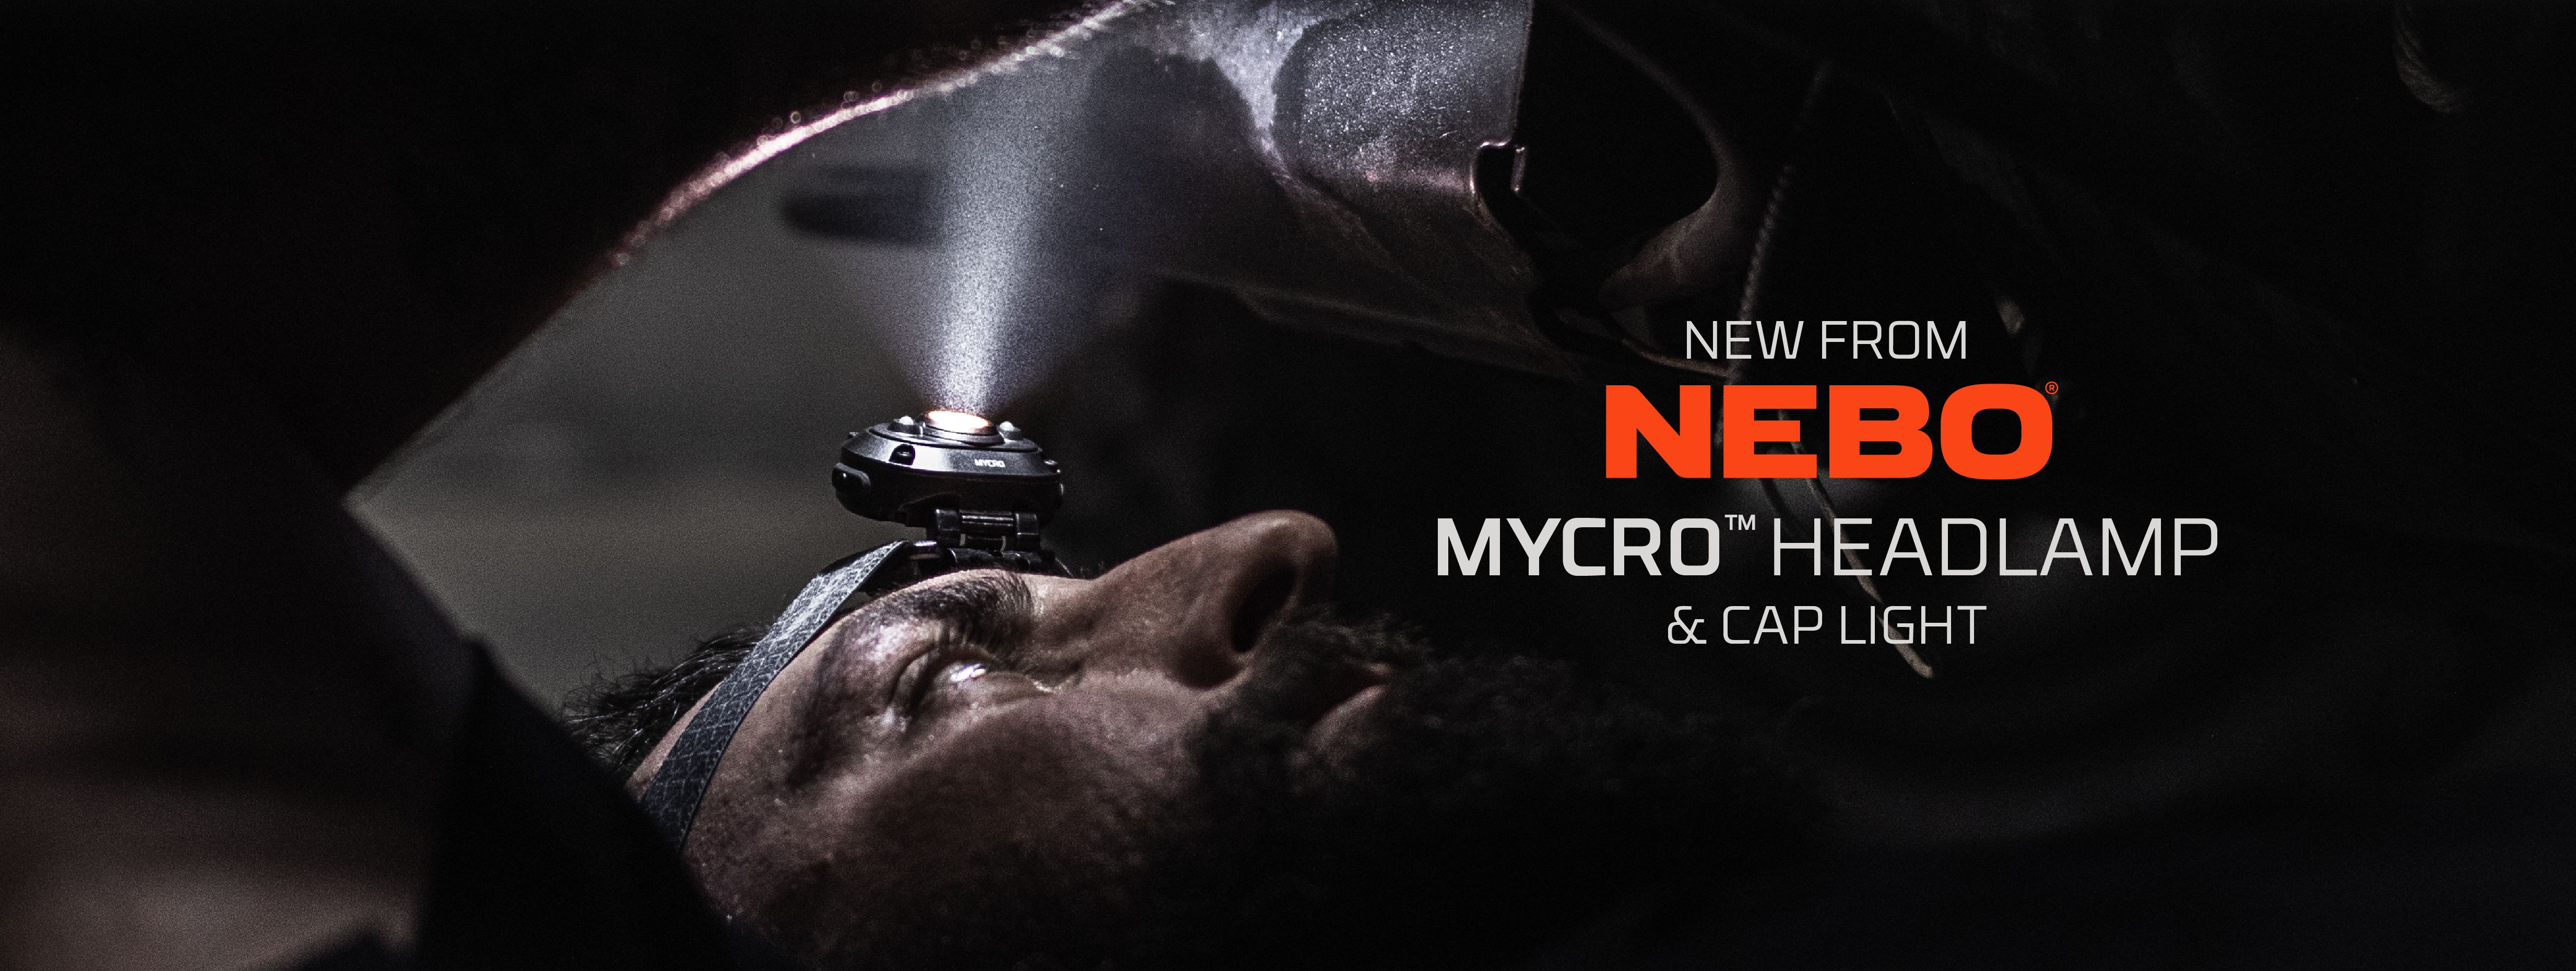 MYCRO Headlamp by NEBO - 400 Lumen Rechargeable Headlamp and Cap Light